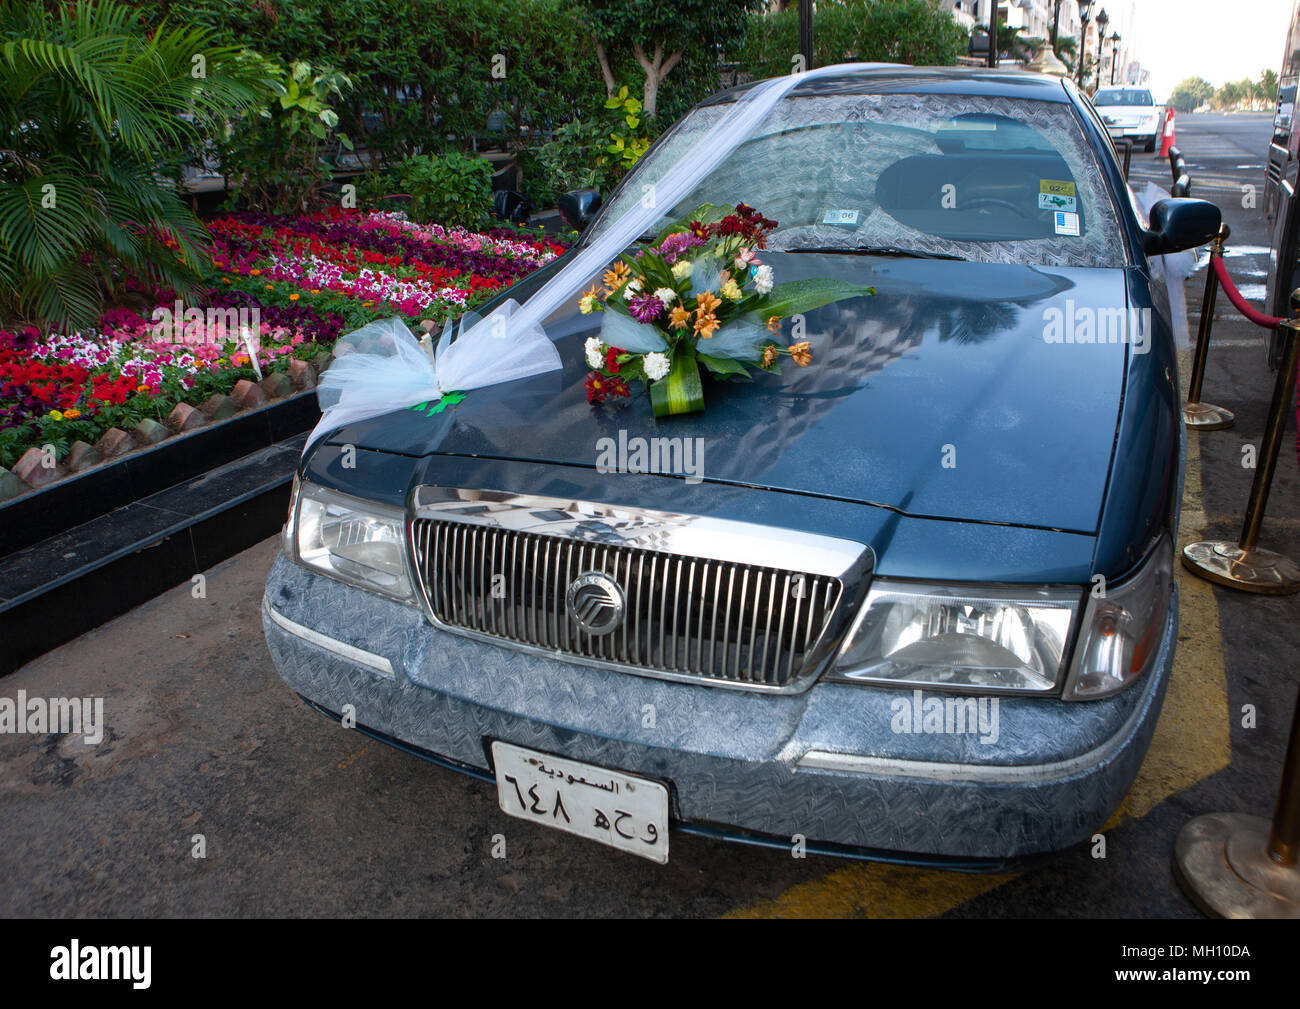 Car in the street decorated for a wedding, Hijaz Tihamah region, Jeddah, Saudi Arabia Stock Photo